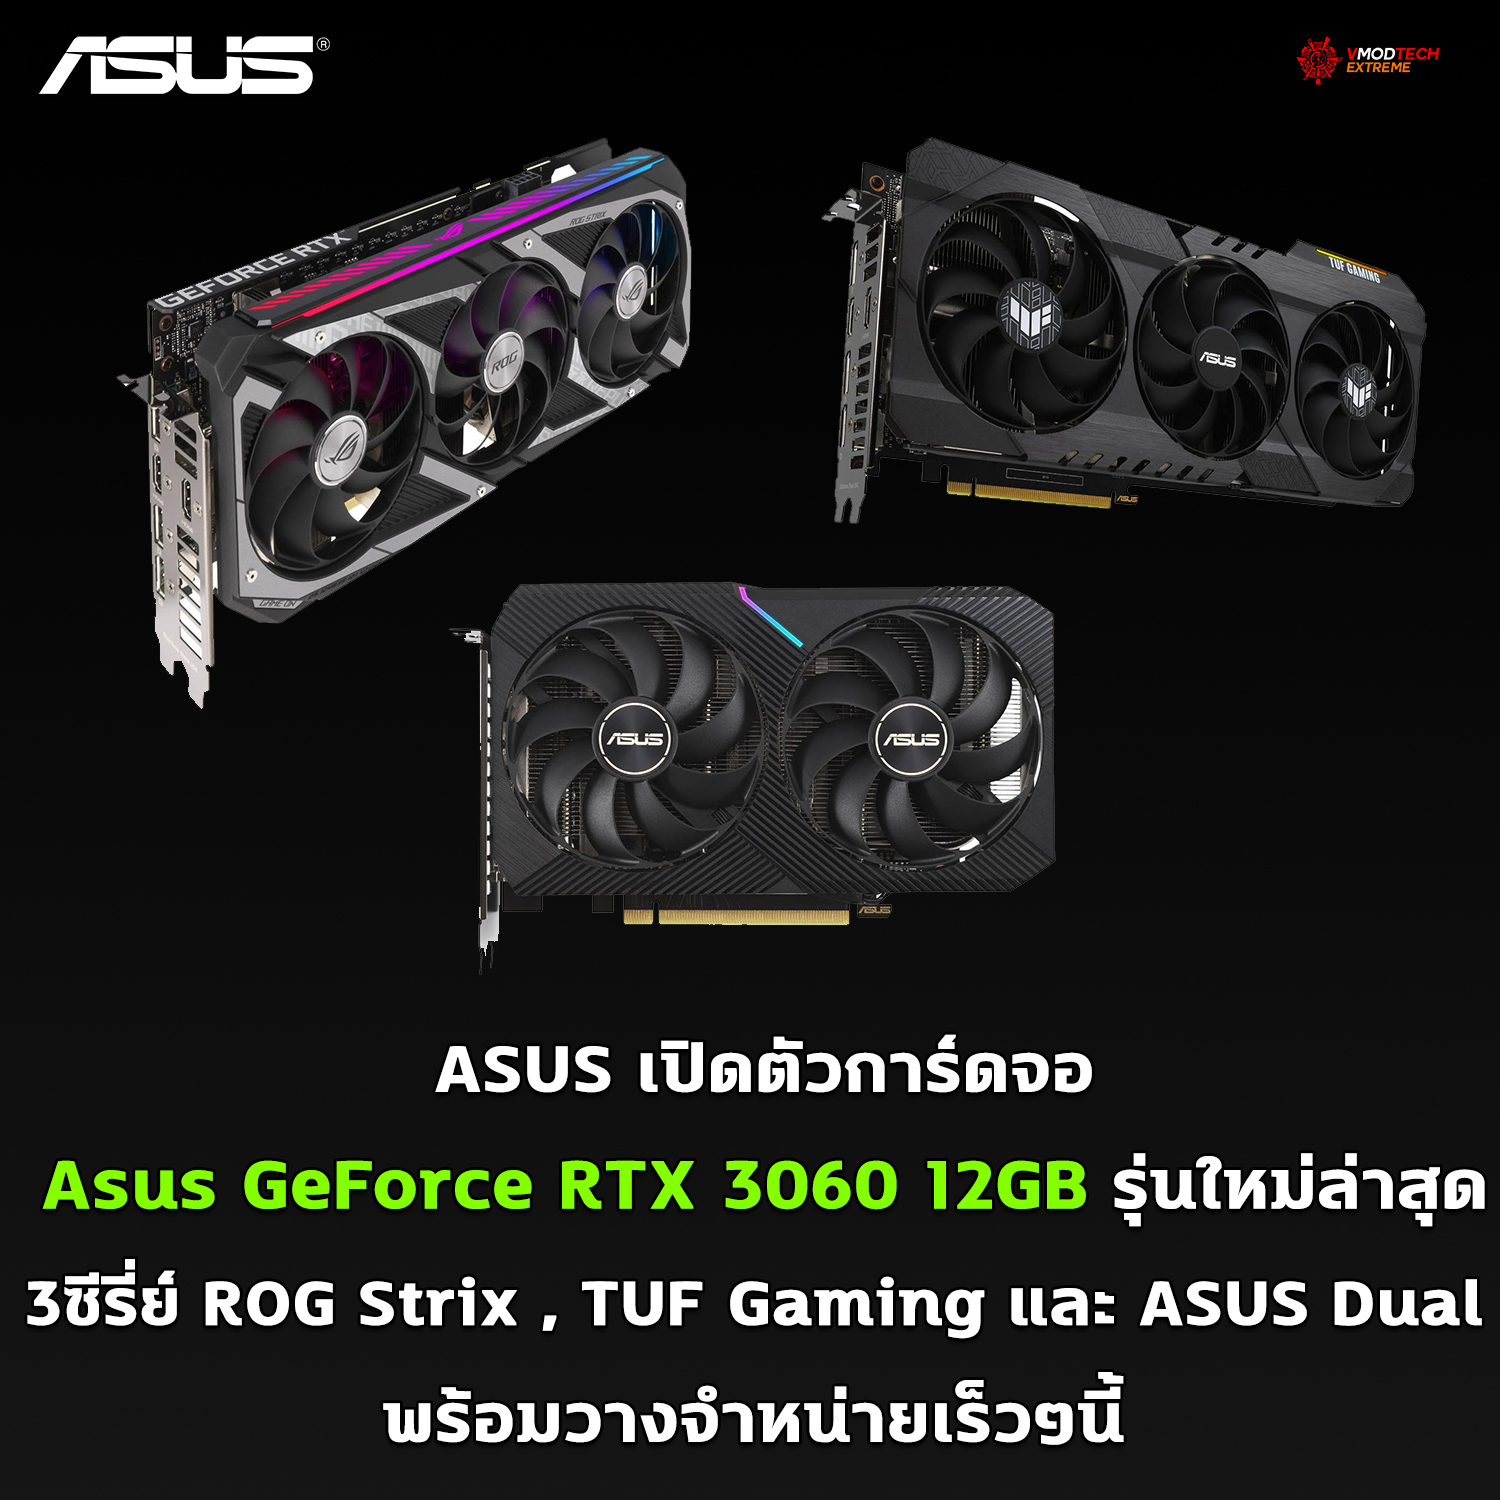 ASUS เปิดตัวการ์ดจอ Asus GeForce RTX 3060 12GB รุ่นใหม่ล่าสุด 3ซีรี่ย์ ROG Strix , TUF Gaming และ ASUS Dual พร้อมวางจำหน่ายเร็วๆนี้ 